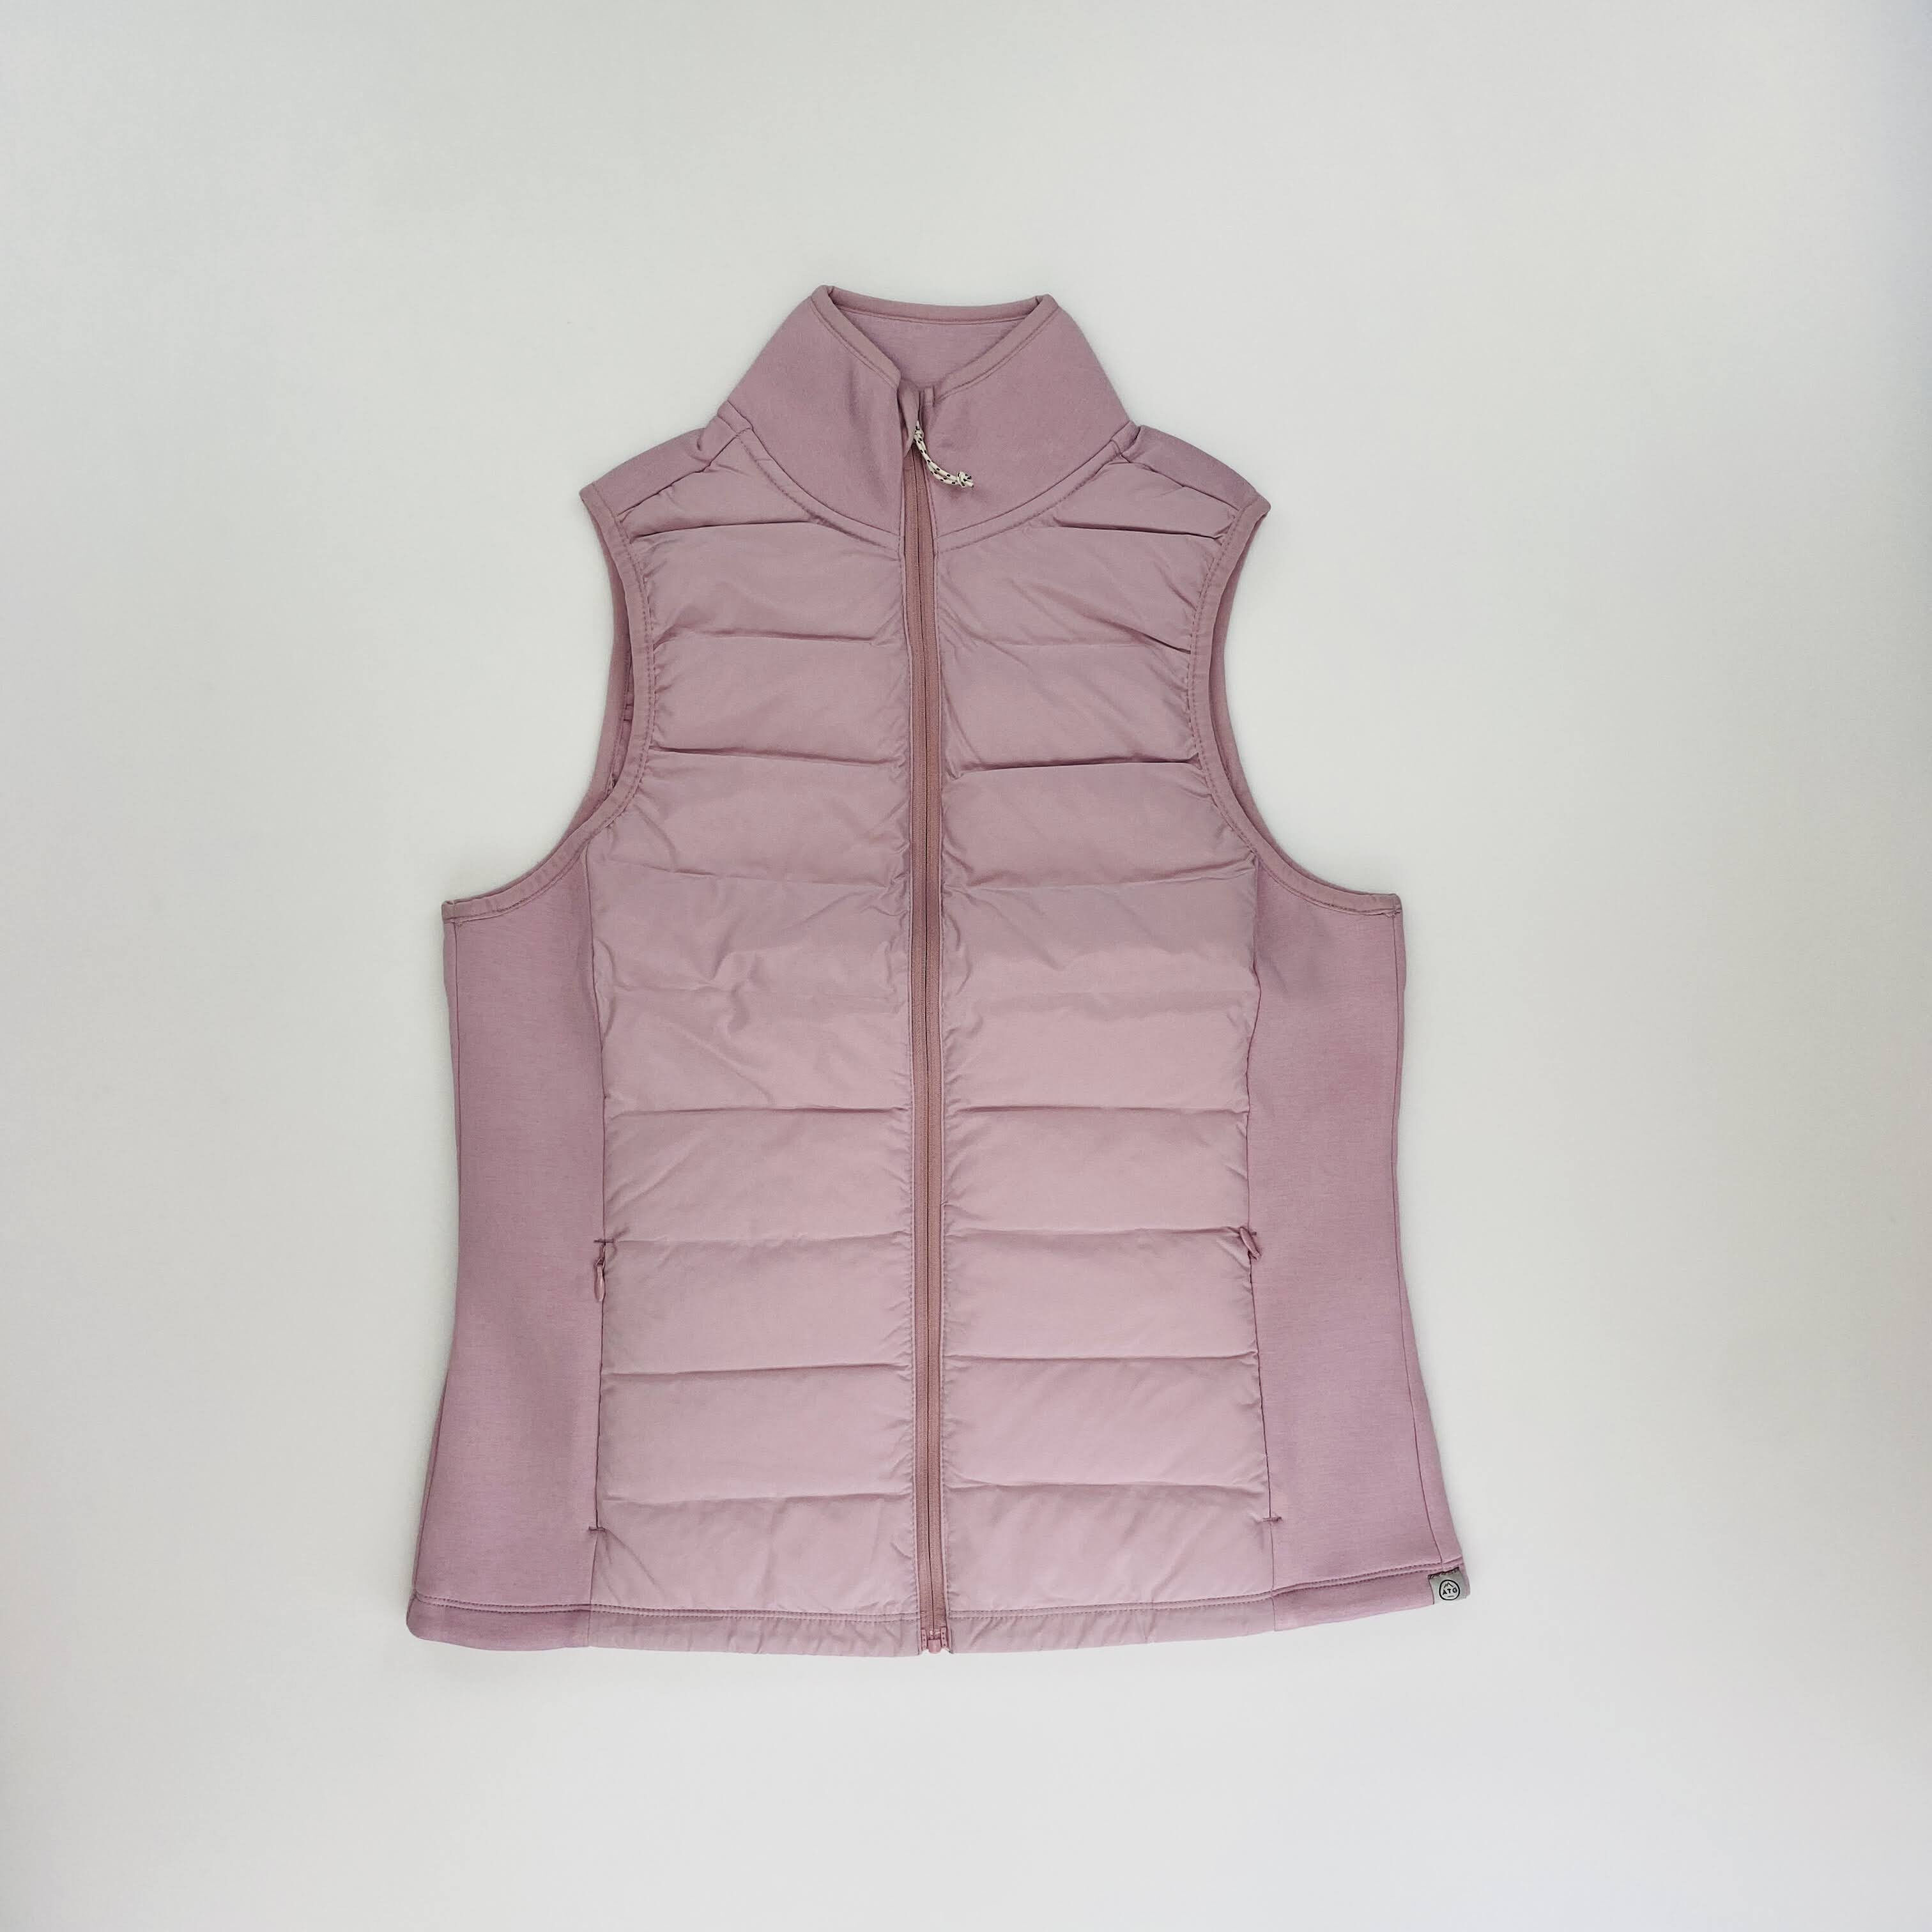 Wrangler Athletic Hybrid Vest - Second Hand Synthetic jacket - Women's - Pink - M | Hardloop